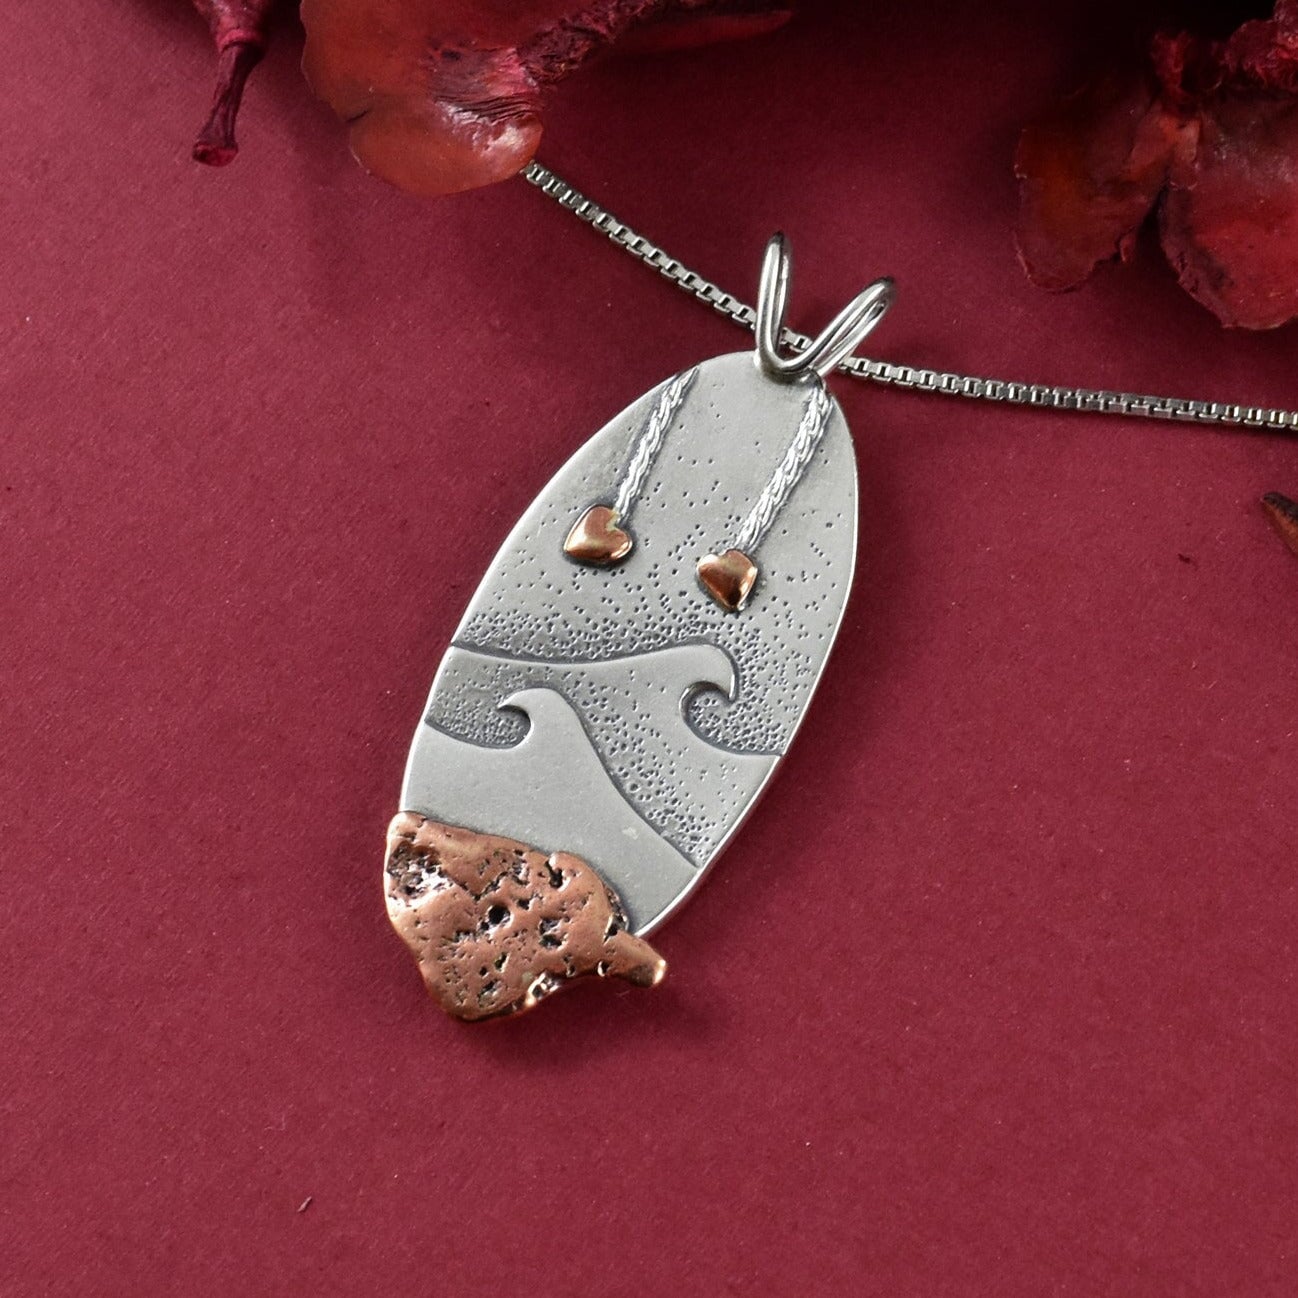 Float Copper Heartstrings Pendant No. 2 - Mixed Metal Pendant   6796 - handmade by Beth Millner Jewelry